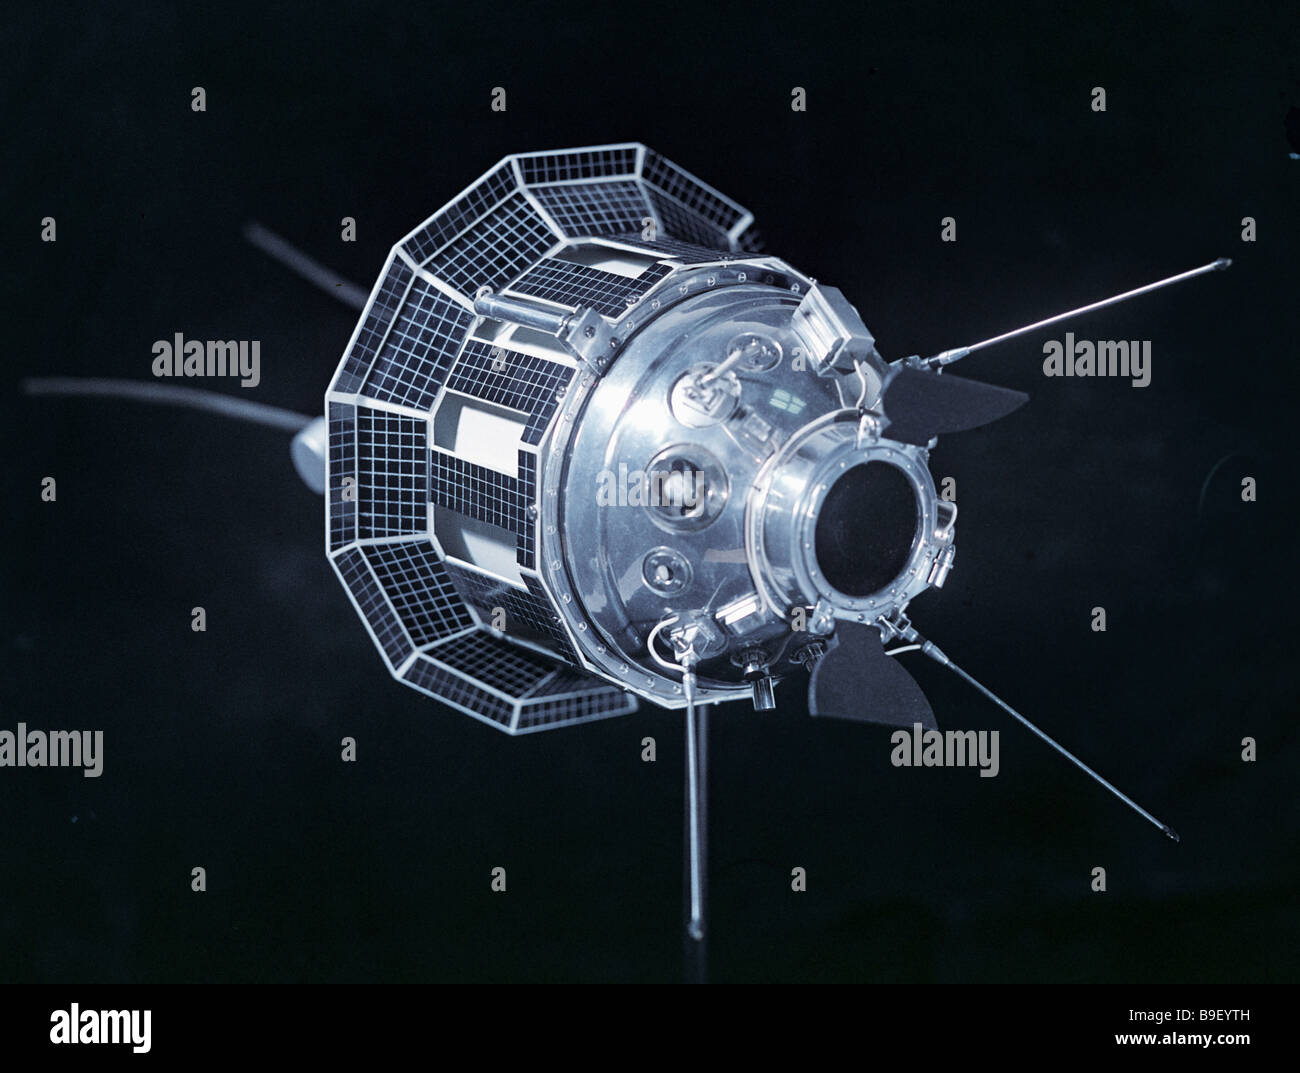 Спутник луна 4. Межпланетная станция (АМС) «зонд-3»,. Советский аппарат Луна 3. Советский космический аппарат «Луна-3». Зонд Луна 3.